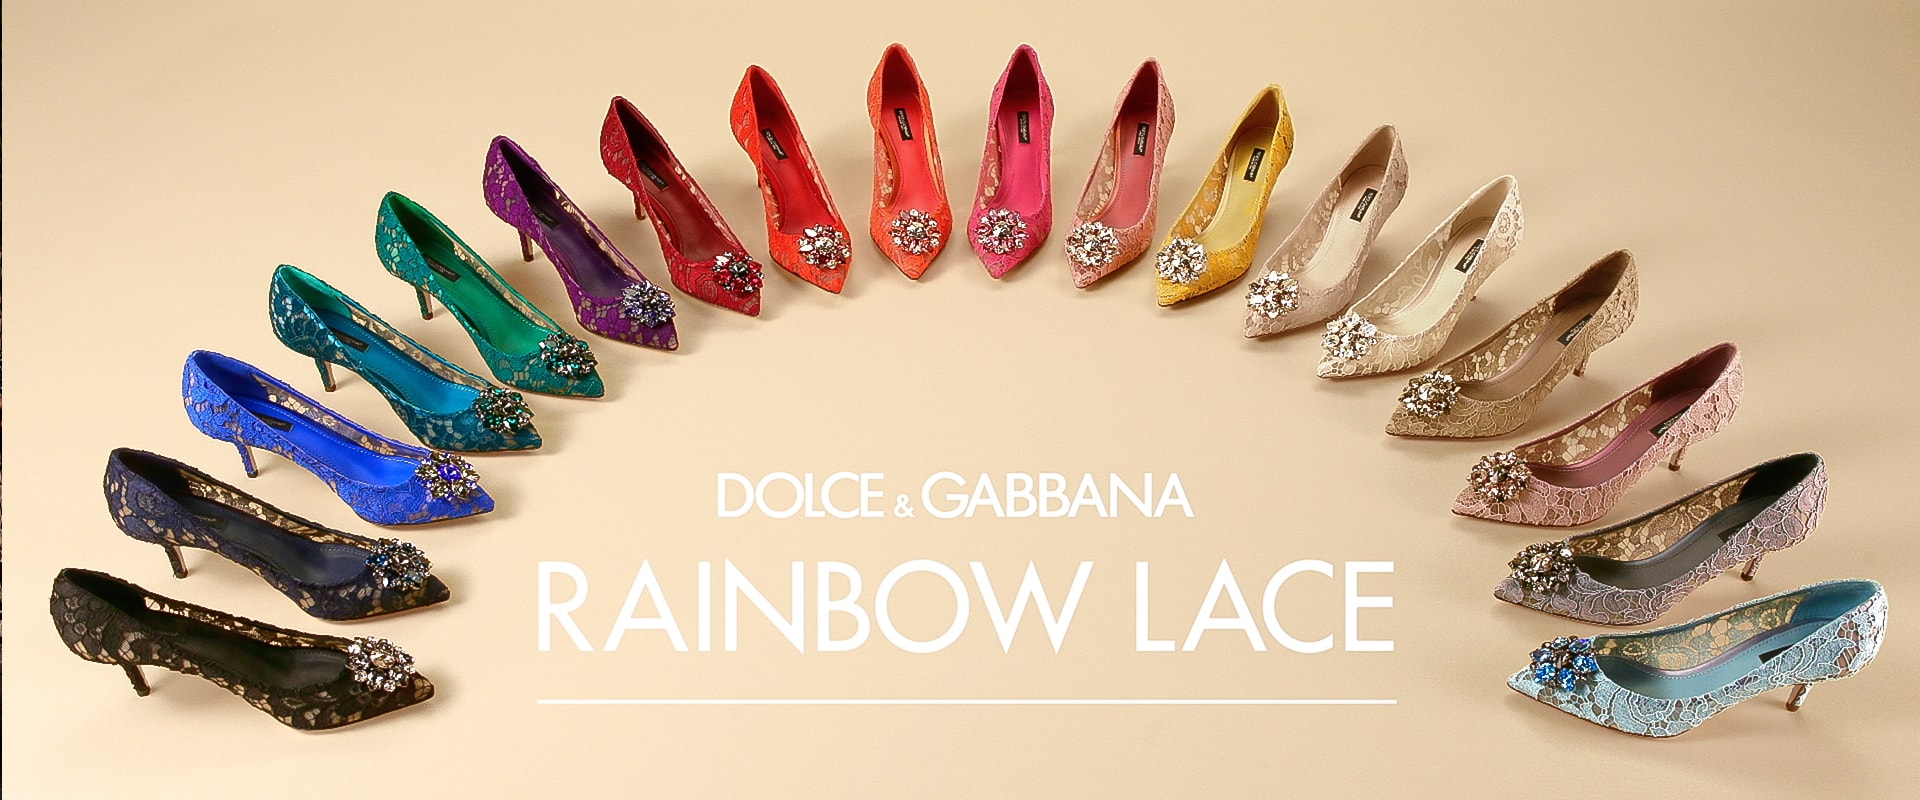 dolce-and-gabbana-rainbow-lace-top-banner-desktop